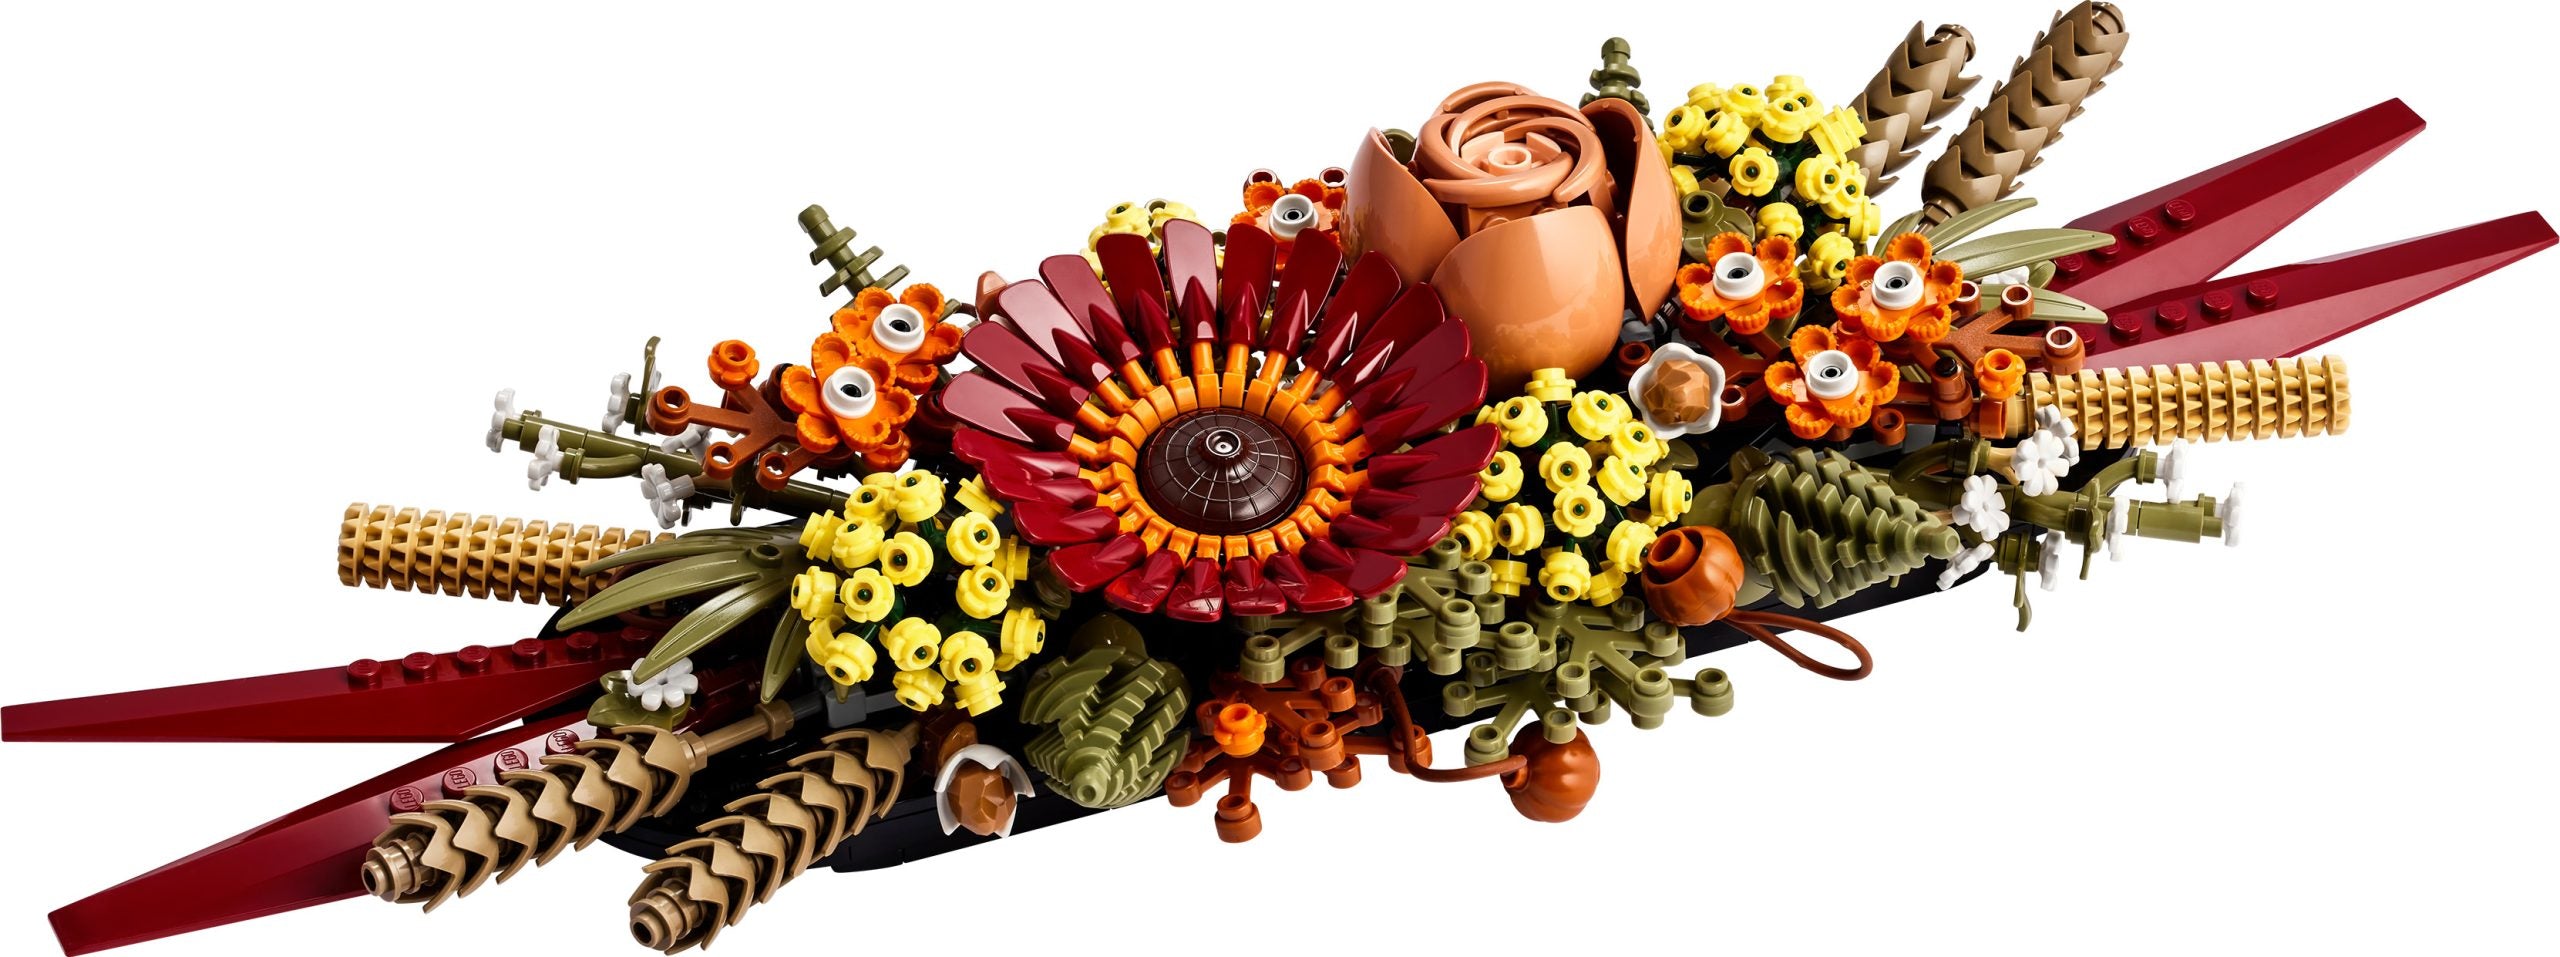 10314 LEGO BOTANICAL - Centrotavola di fiori secchi